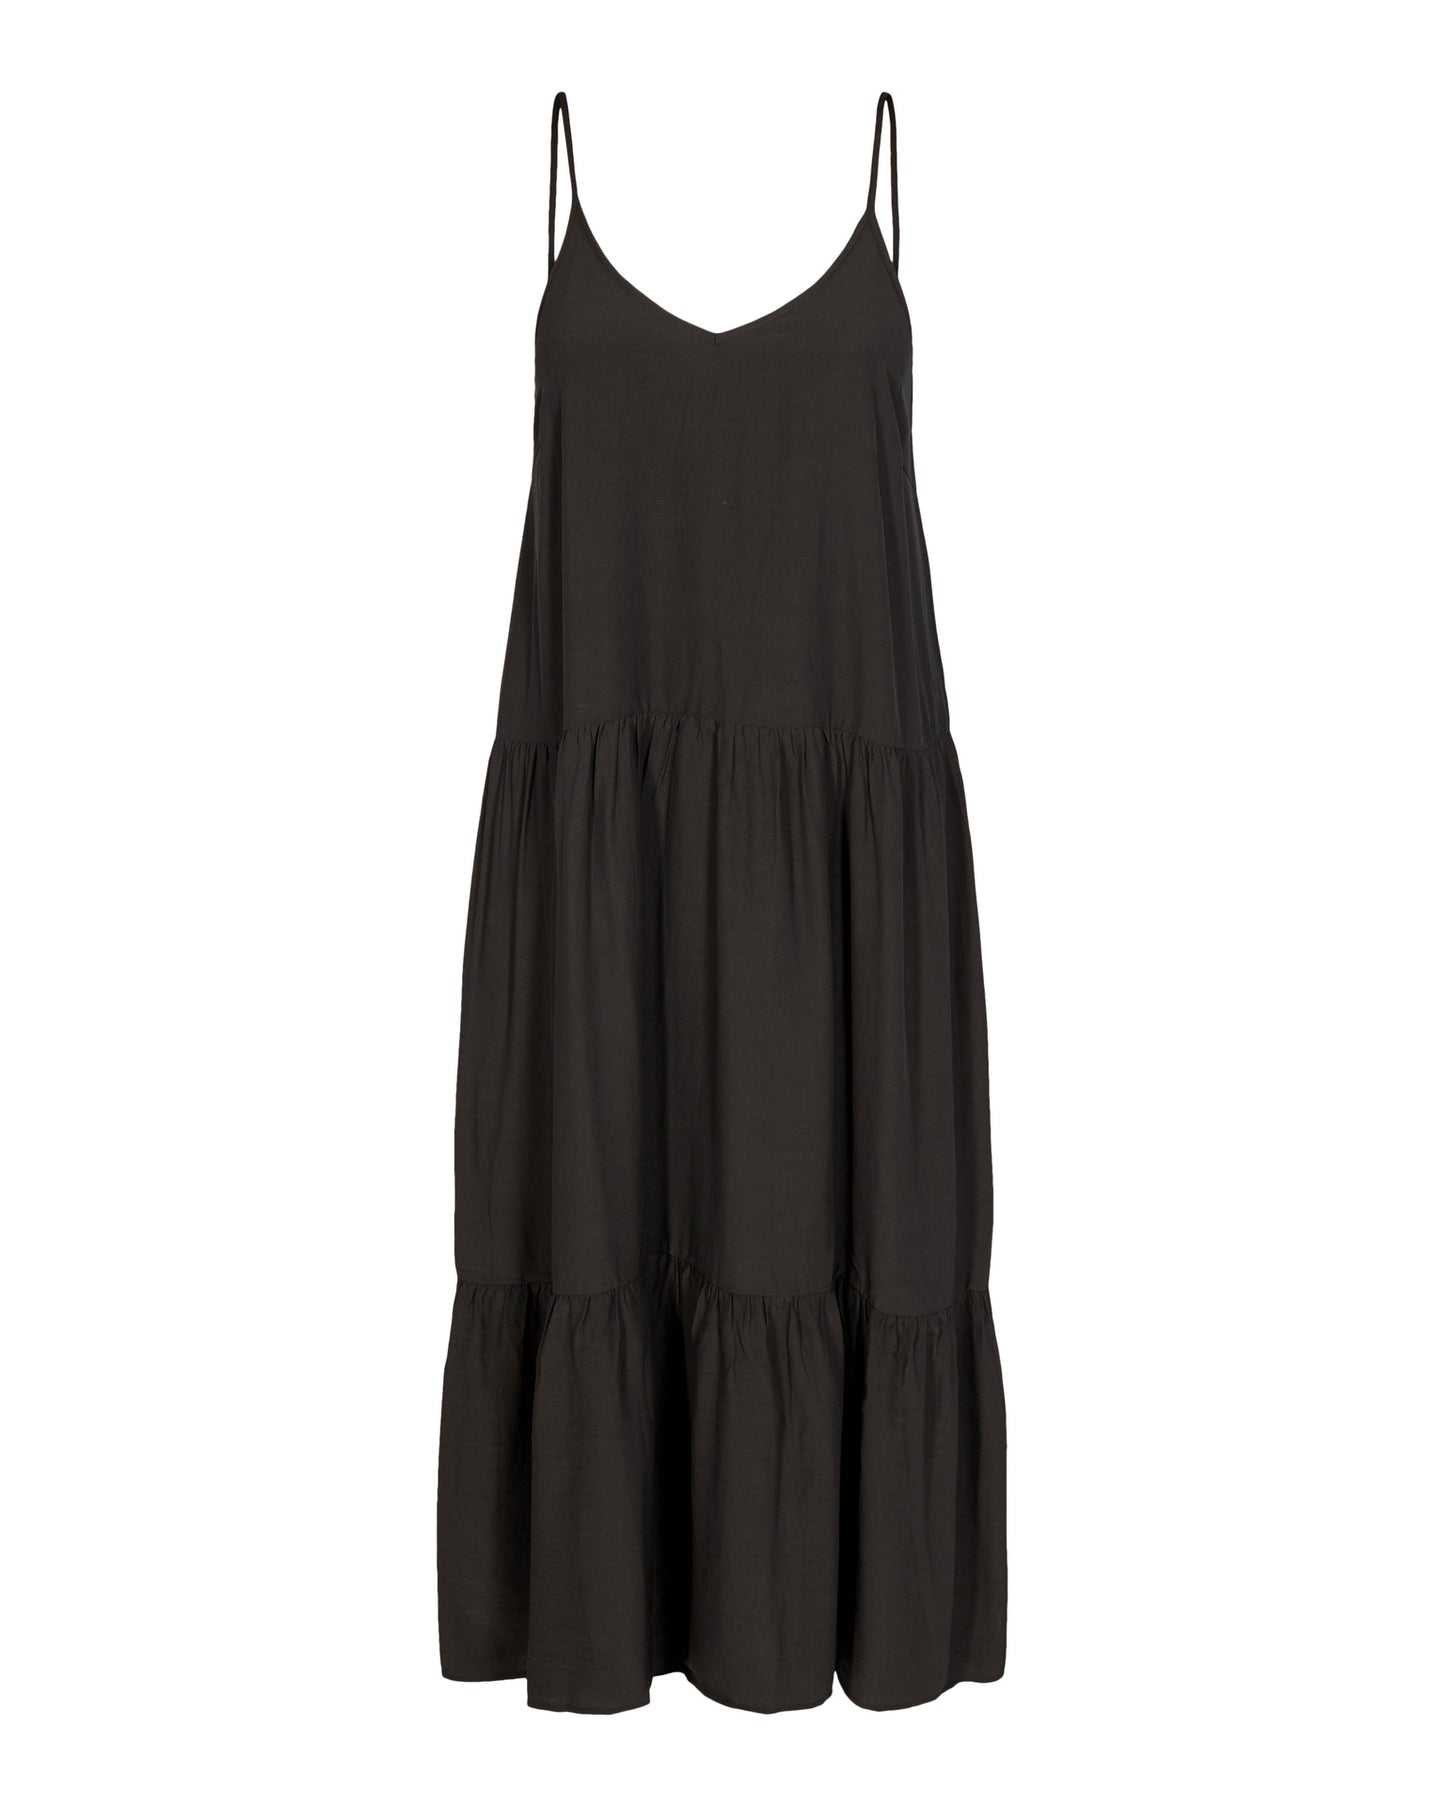 Cocouture - New Gipsy Strap Dress - Black